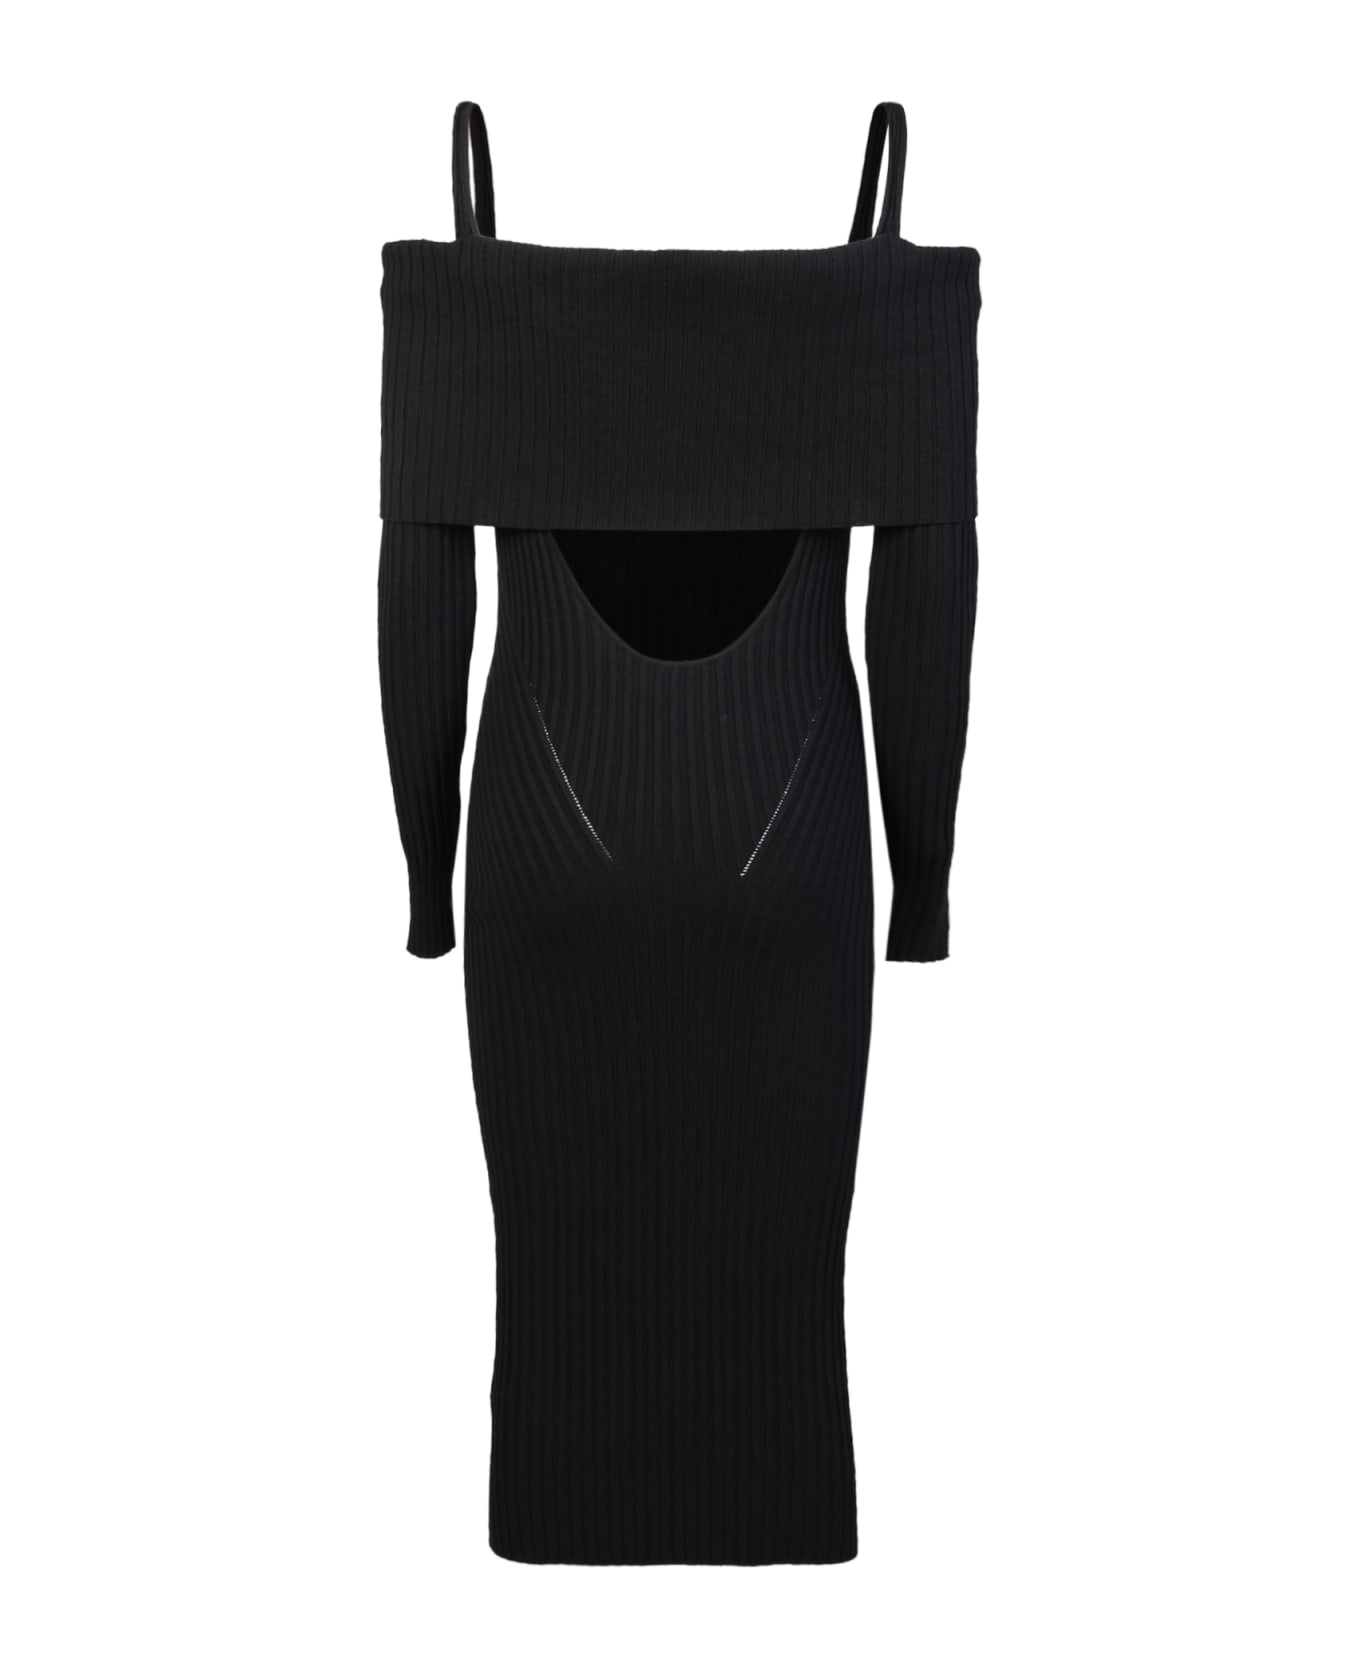 ANDREĀDAMO Stretch Ribber Dress - Black